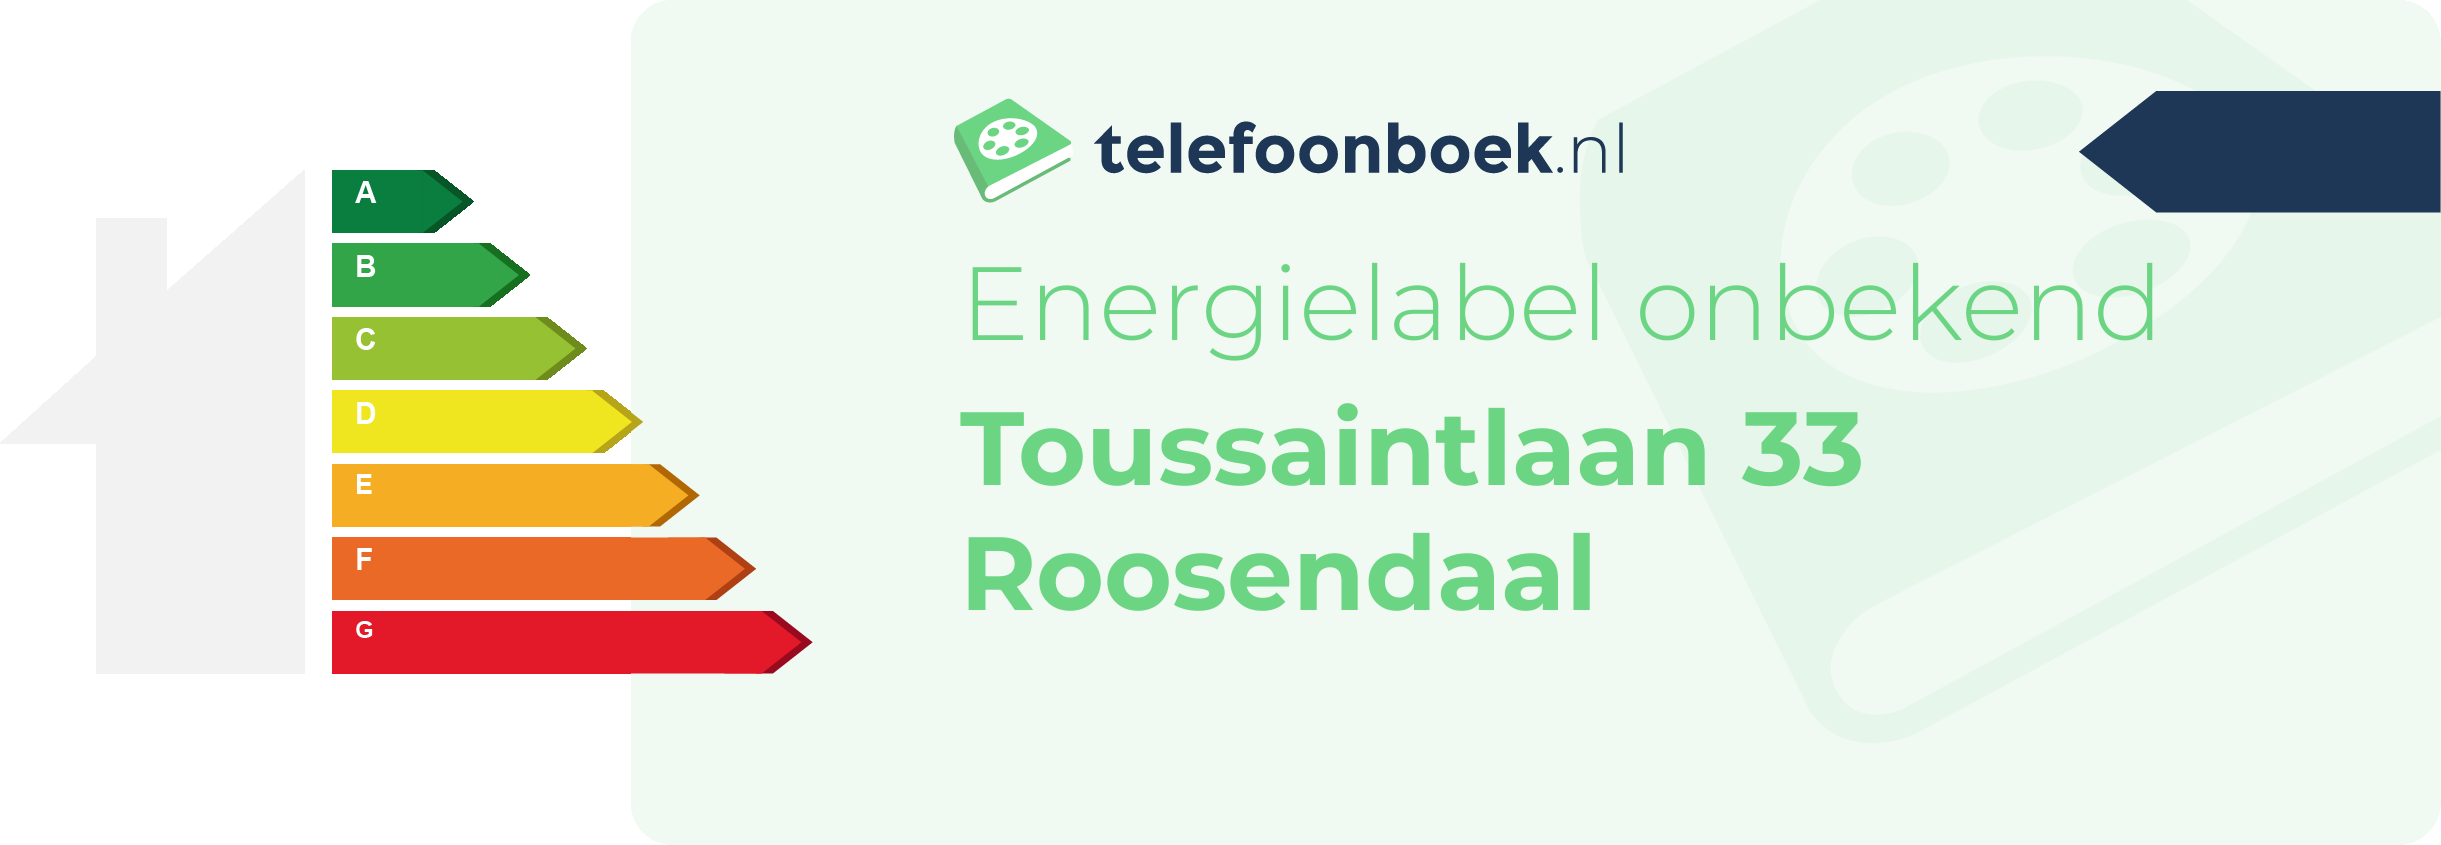 Energielabel Toussaintlaan 33 Roosendaal